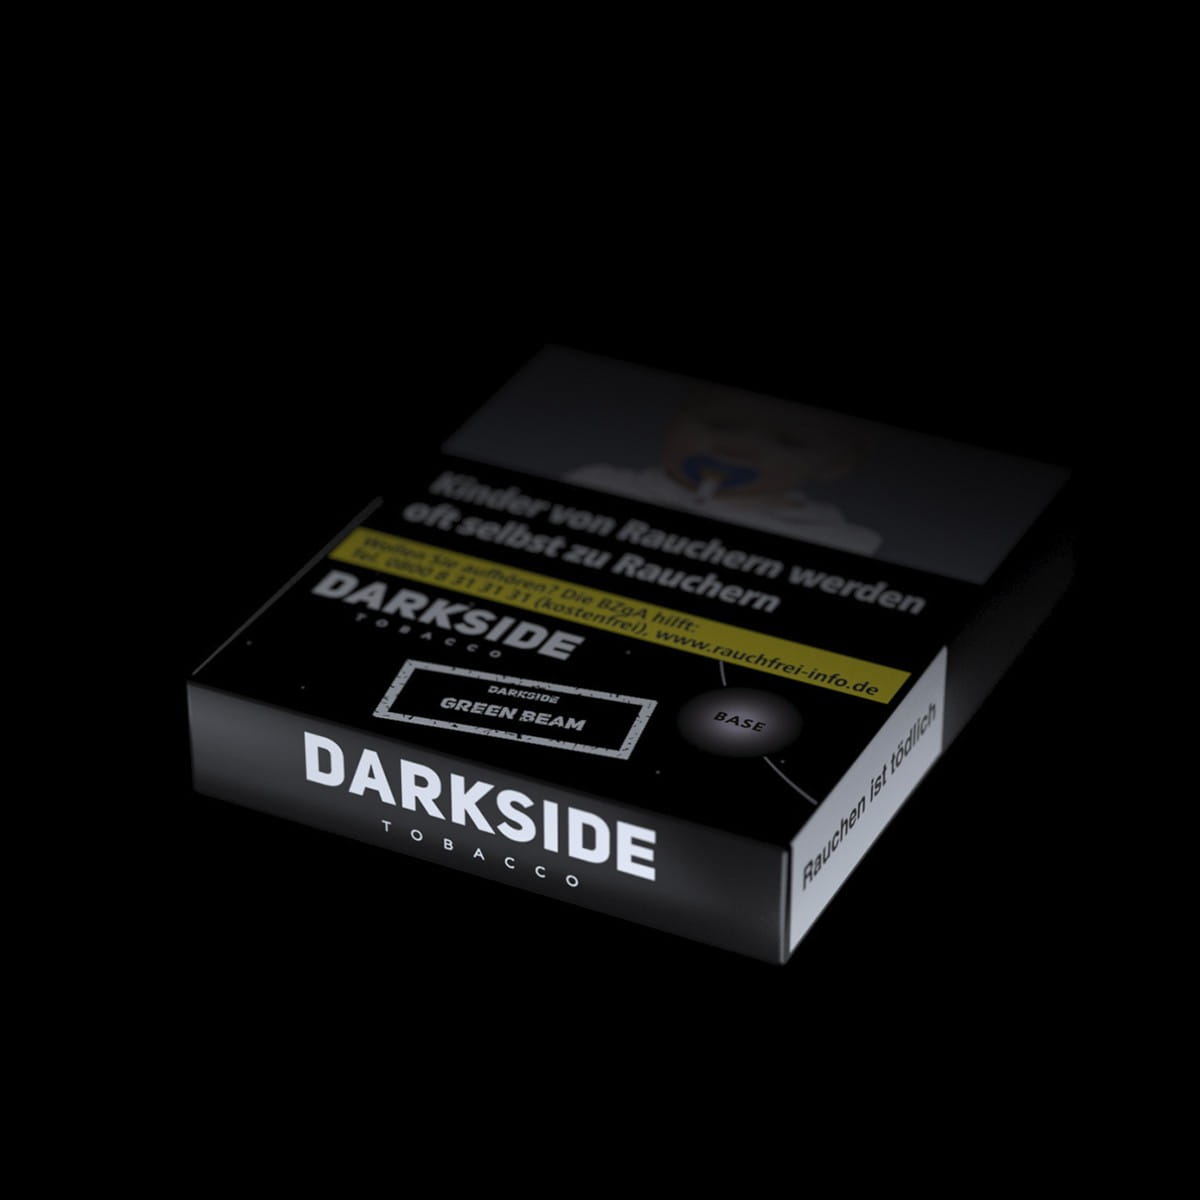 Darkside Base Tabak - Green Beam 200 g